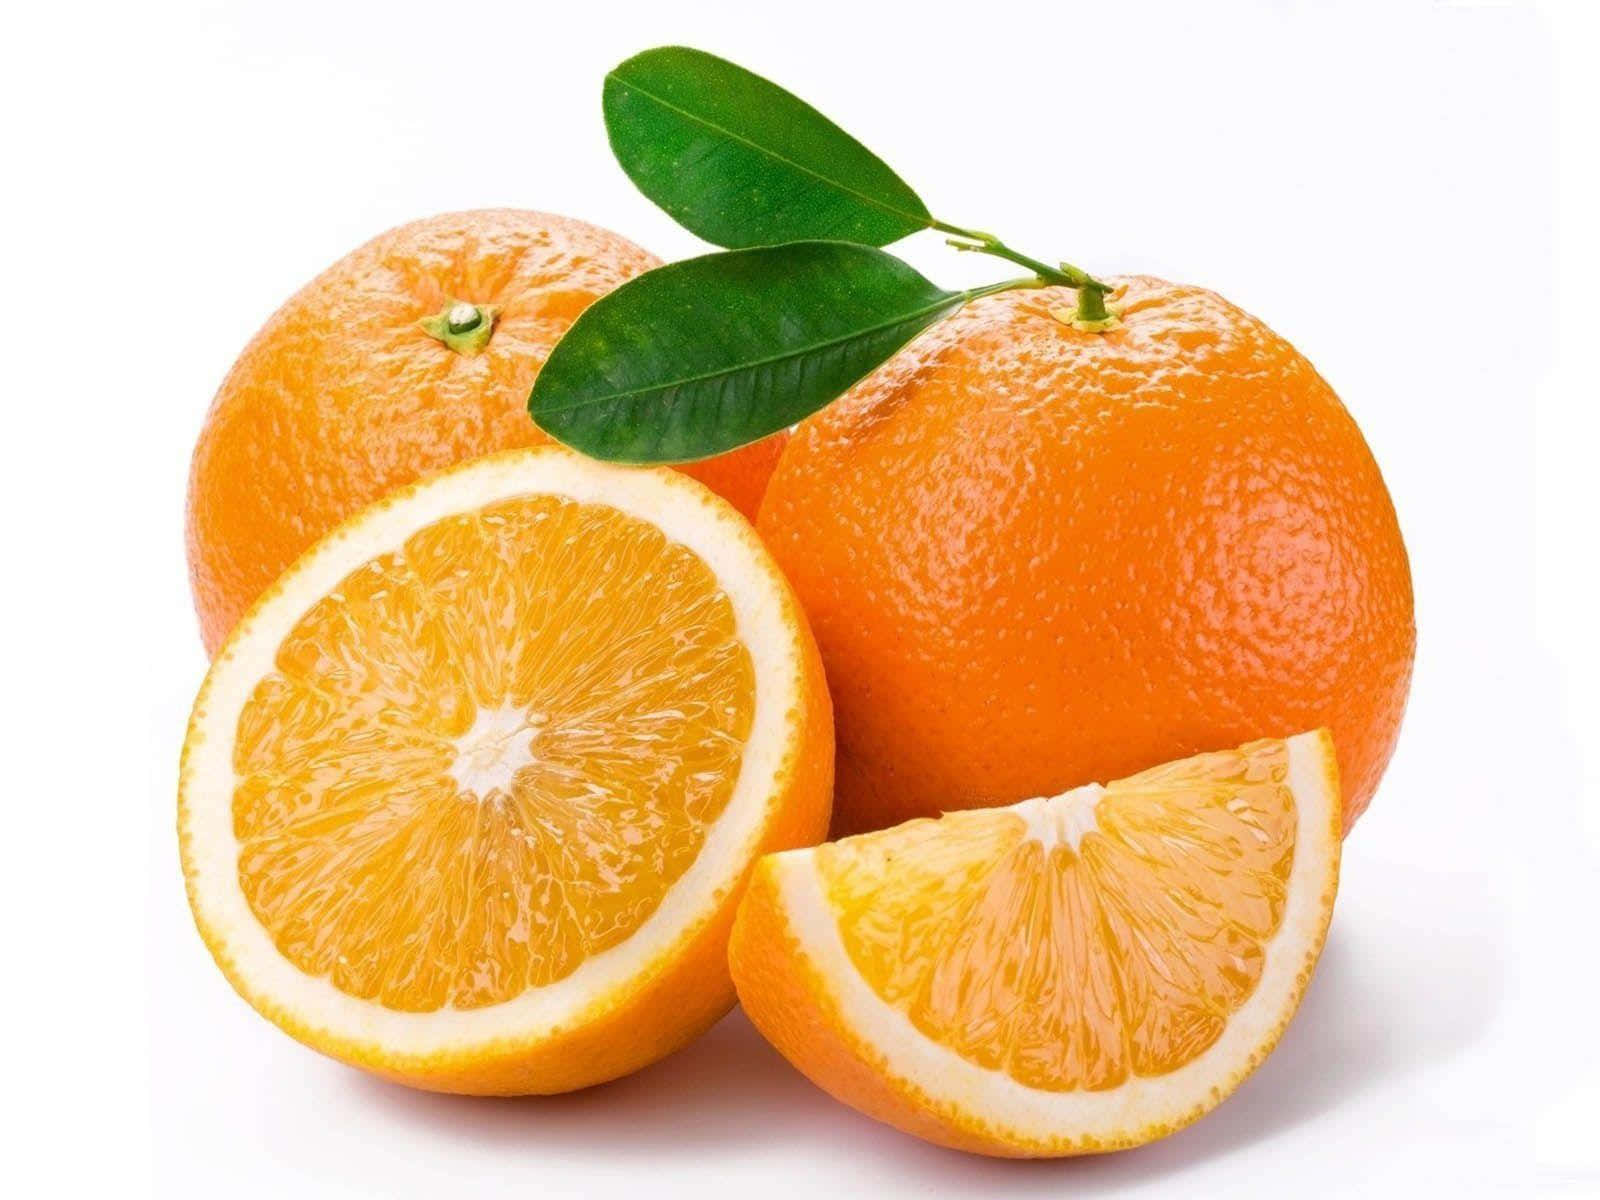 Fresh and Vibrant Orange Fruit on Wooden Table